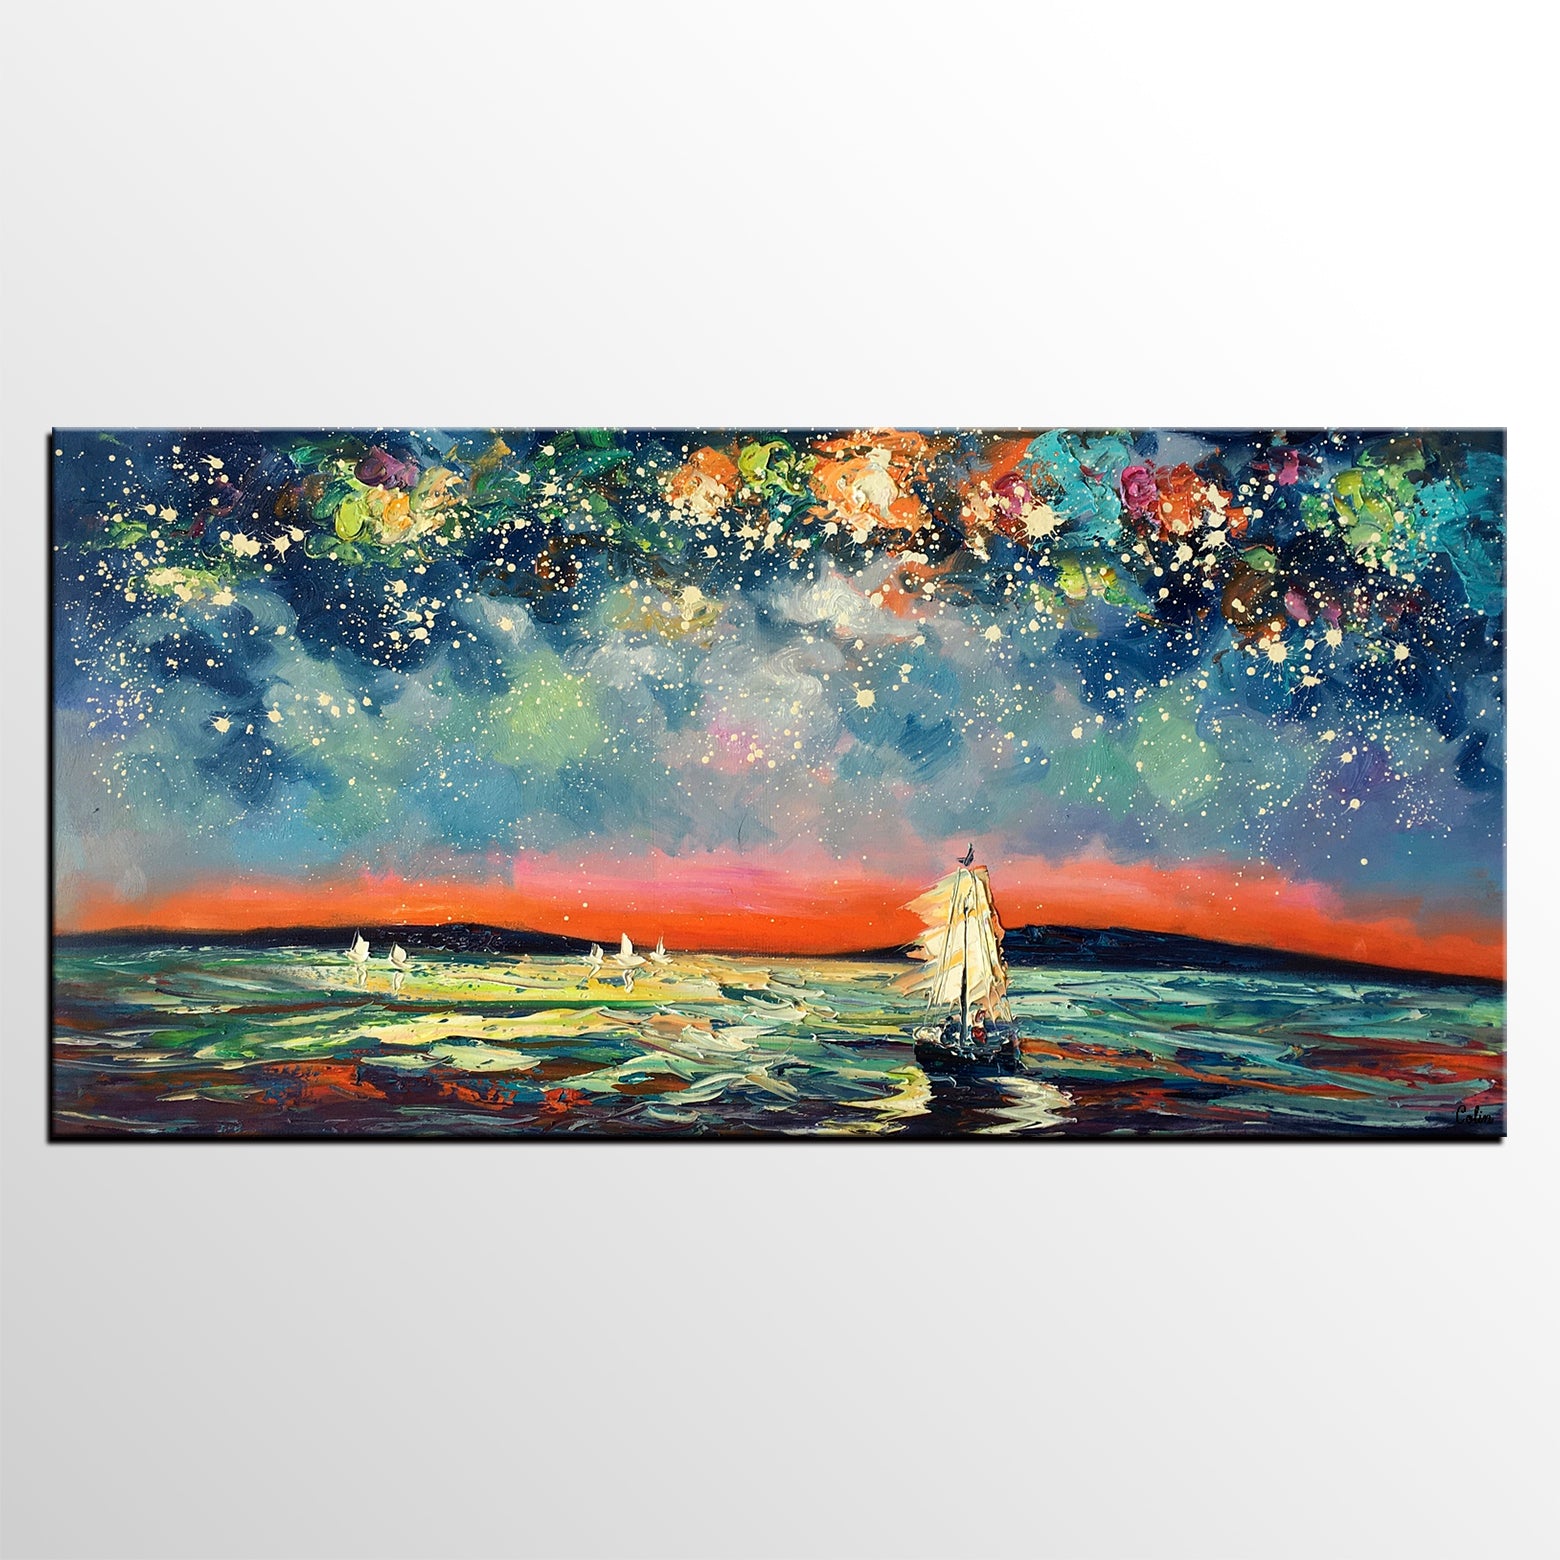 Sail Boat under Starry Night Sky Painting, Landscape Painting, Original Artwork, Custom Extra Large Canvas Painting-artworkcanvas